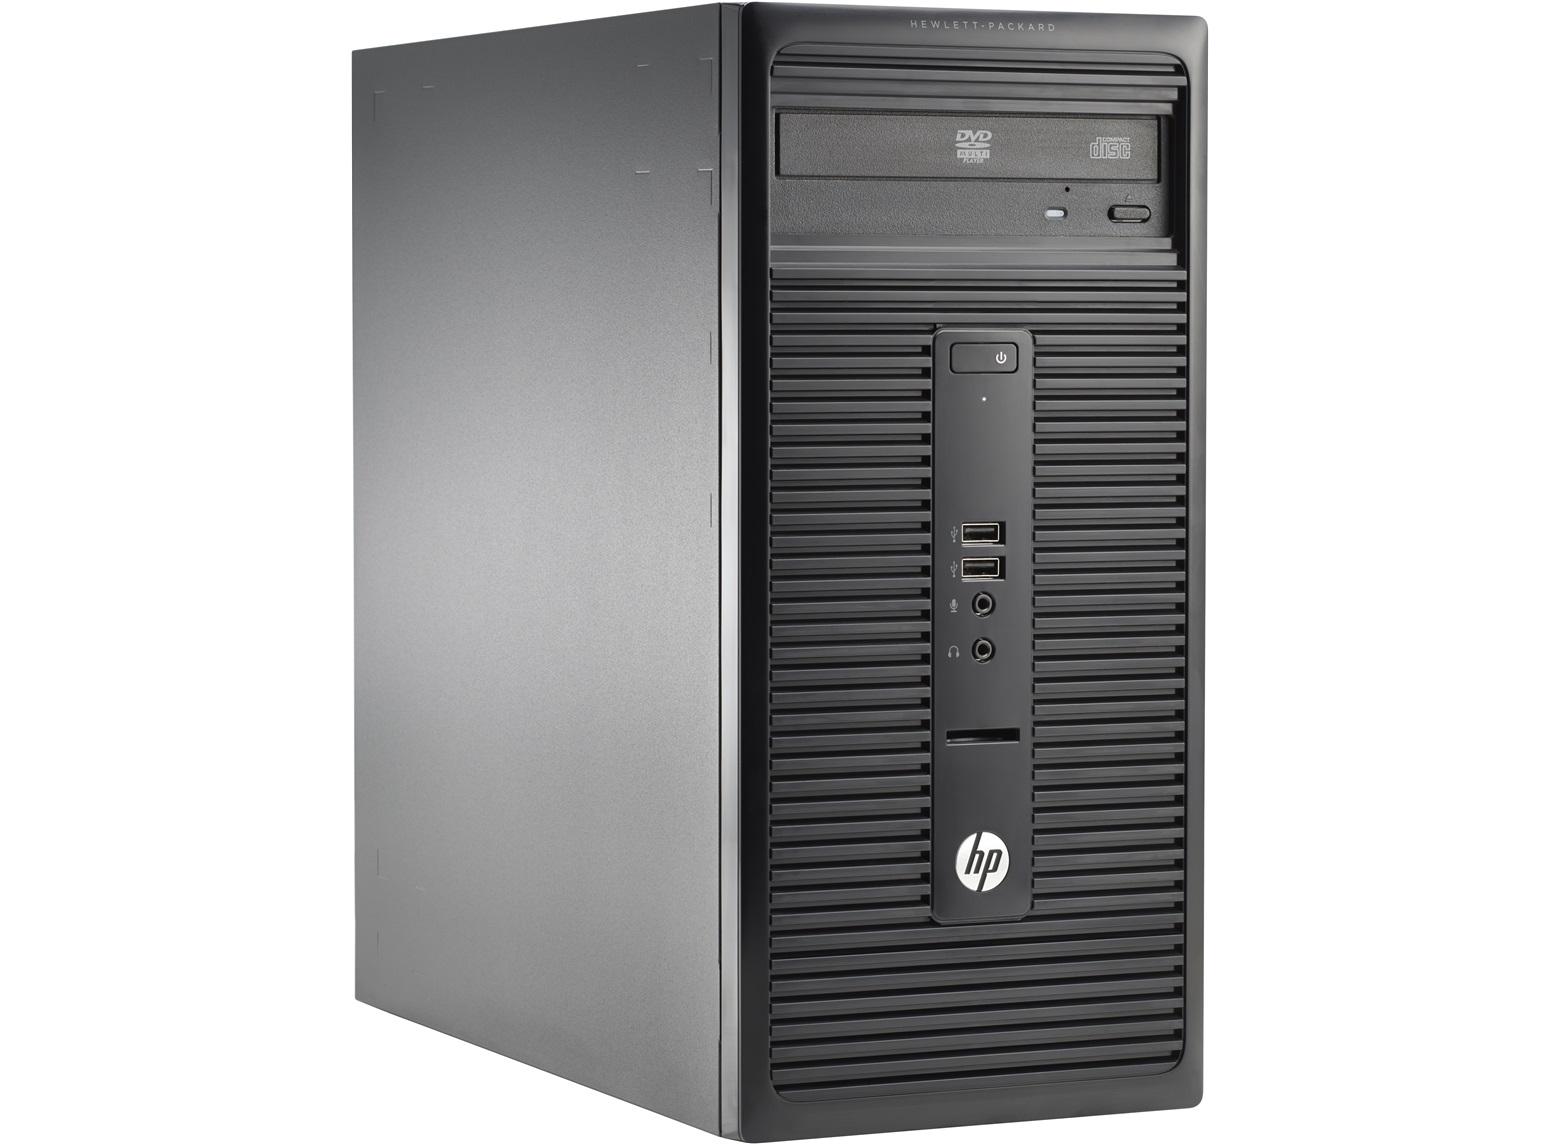 Máy bộ HP 280 G1 MT, Core i5-4590s/4GB/500GB (L1R07PT)